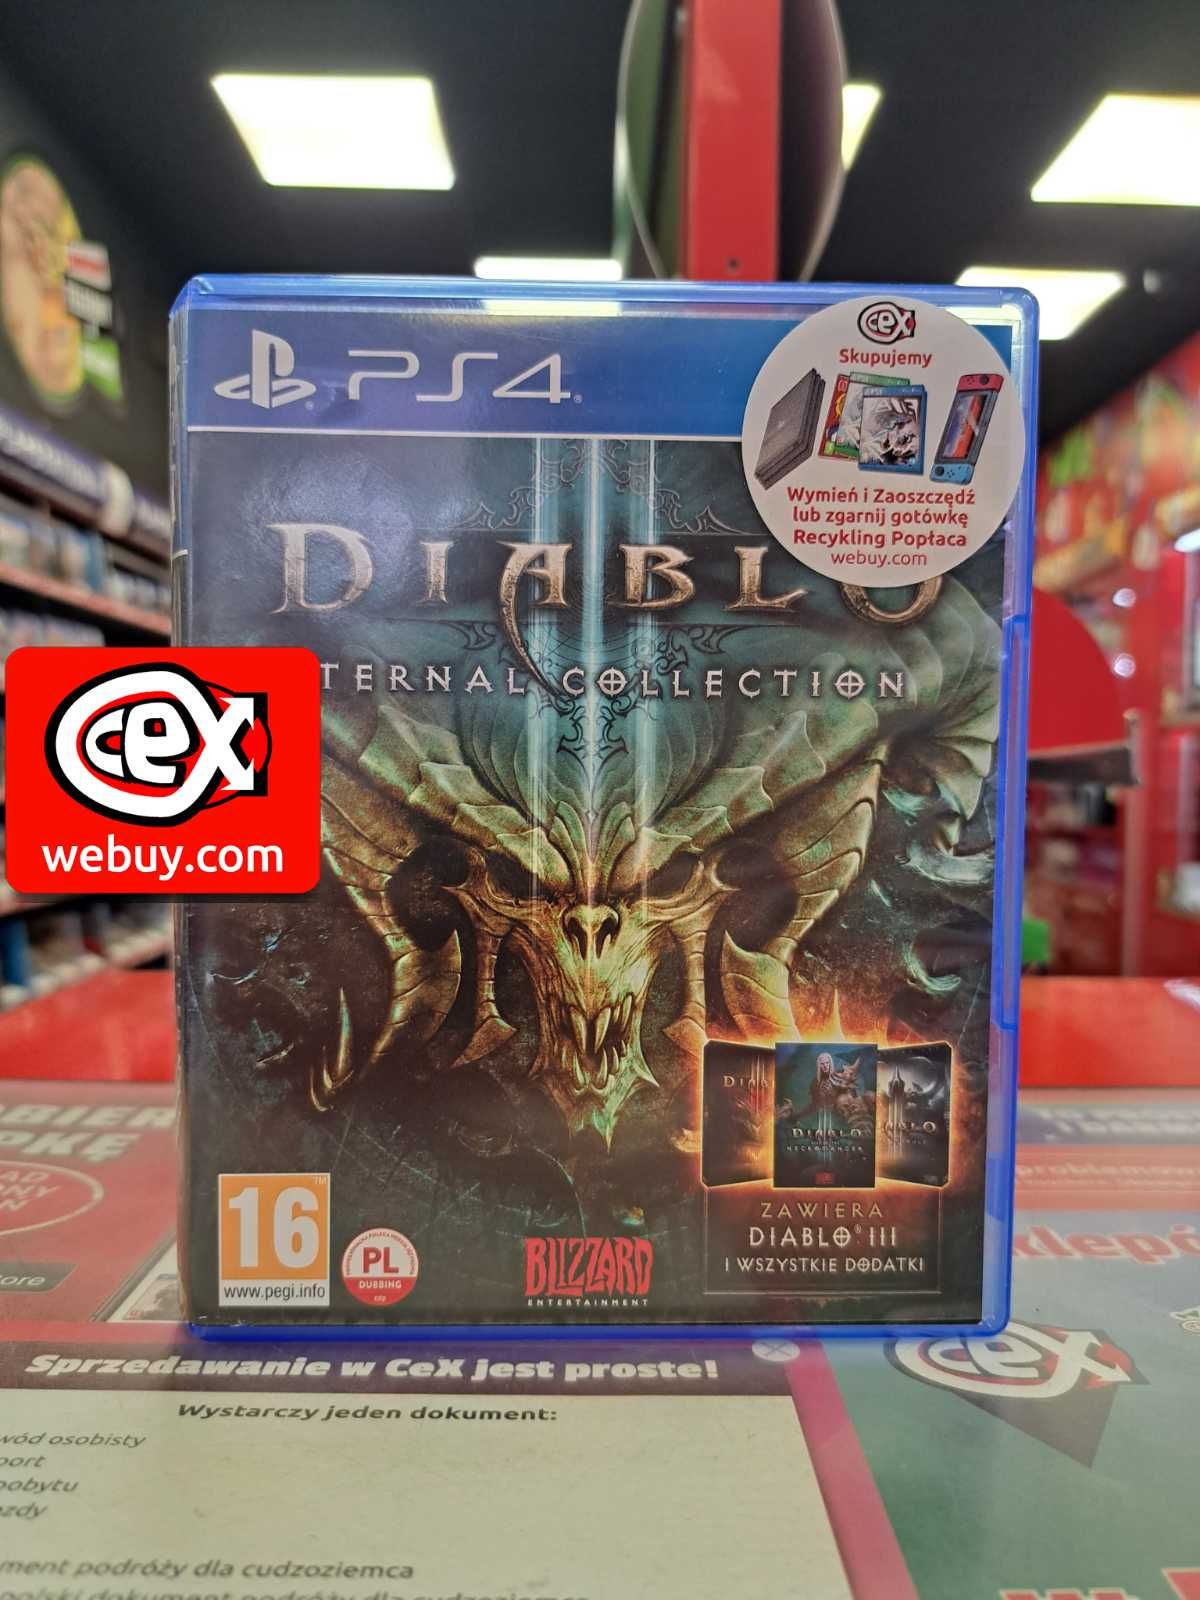 Diablo III Eternal Collection Playstation 4